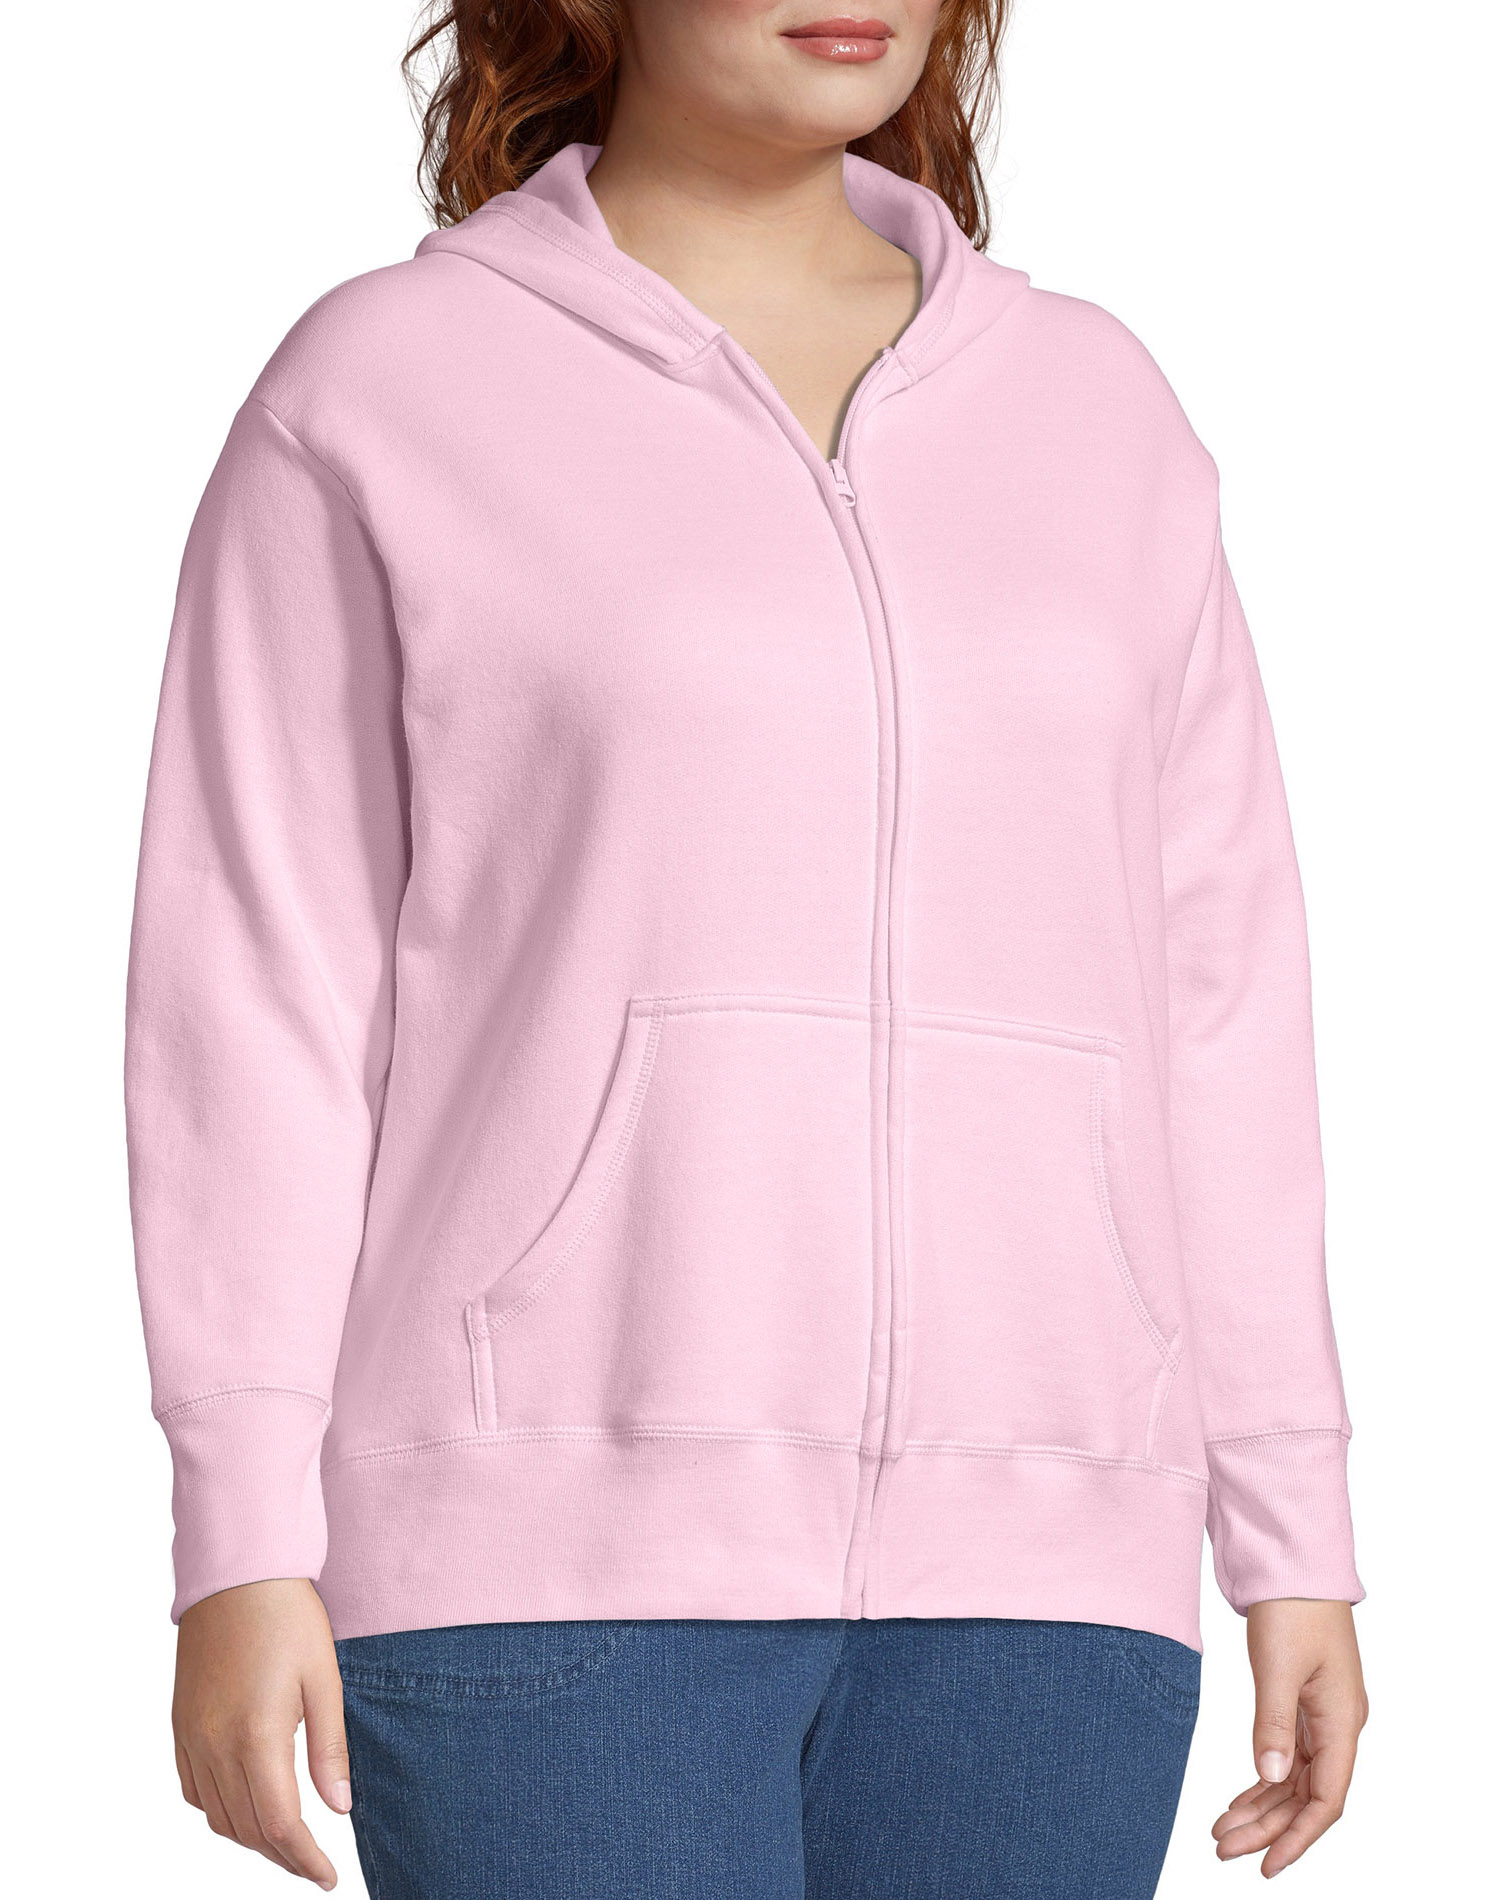 Just My Size Women's Plus Size Fleece Zip Hood Jacket - image 2 of 6